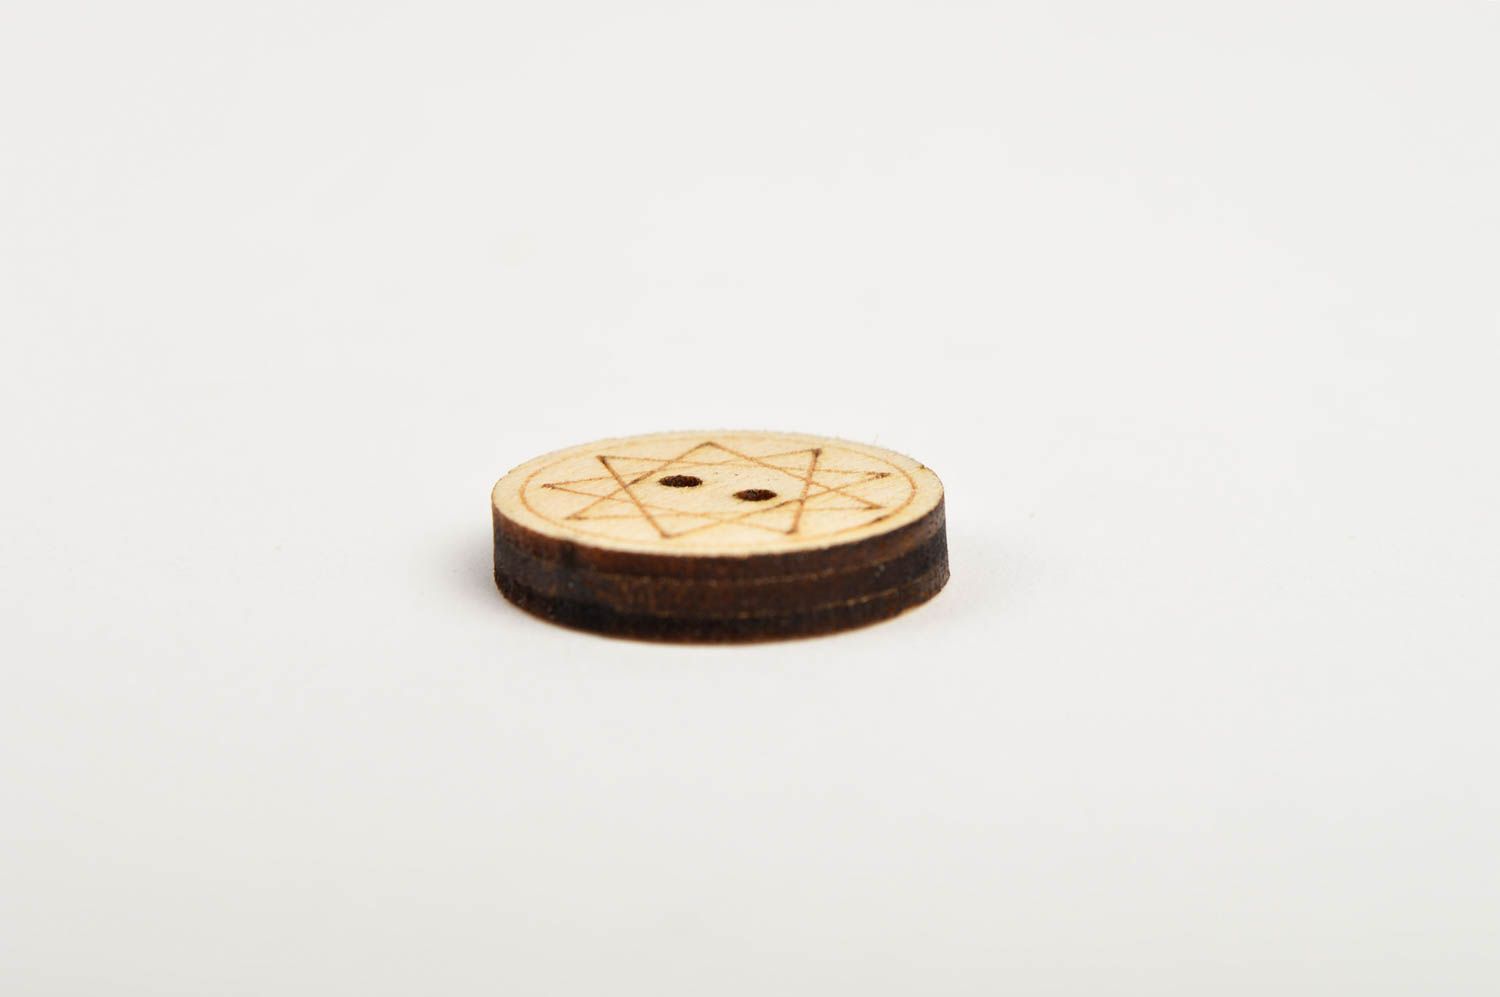 Handmade wooden blank button needlework supplies gift ideas for girls photo 4